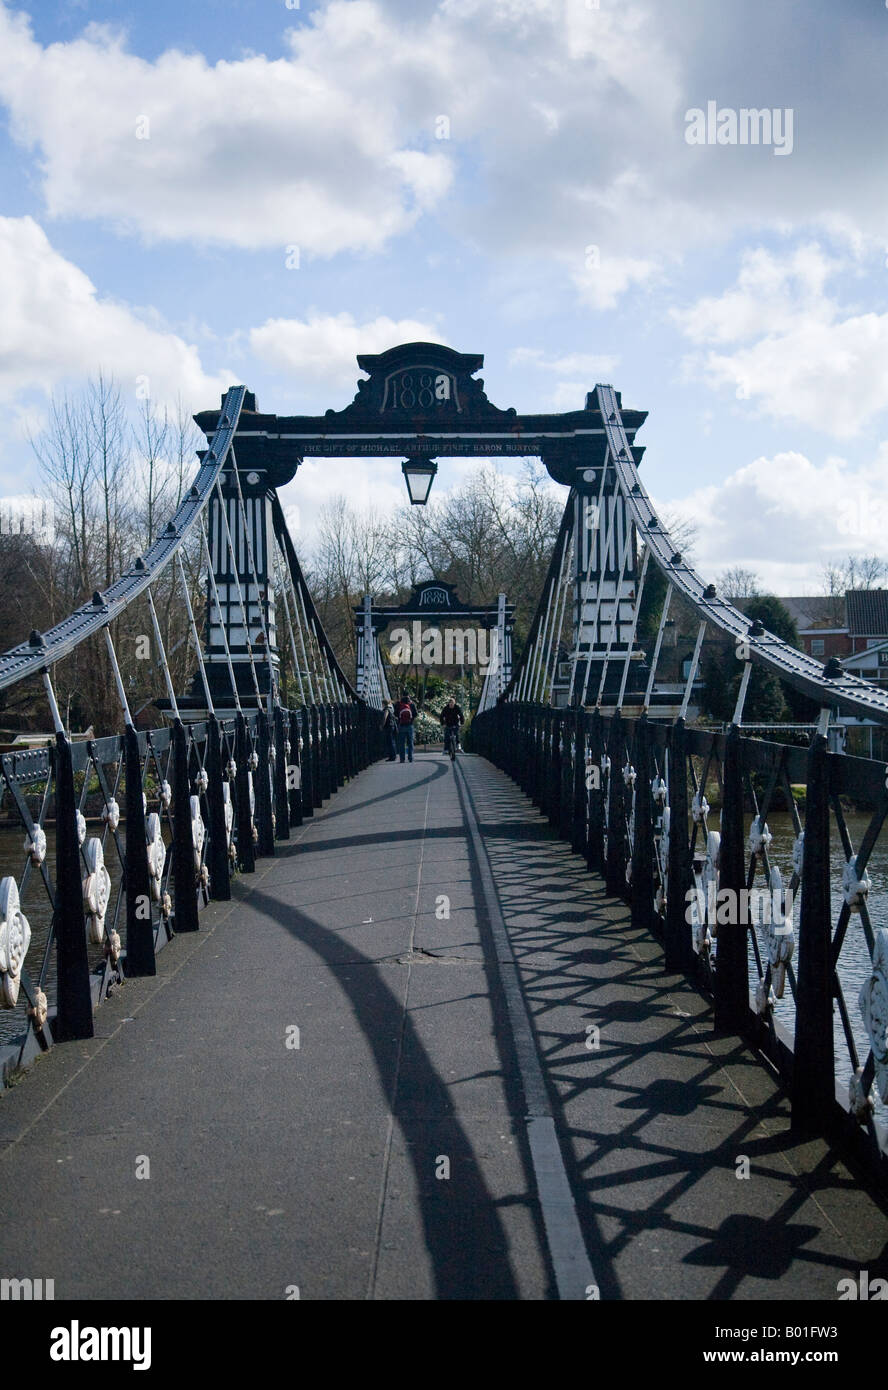 Stapenhill Ferry Bridge in Burton Upon Trent over the river Trent. Stock Photo